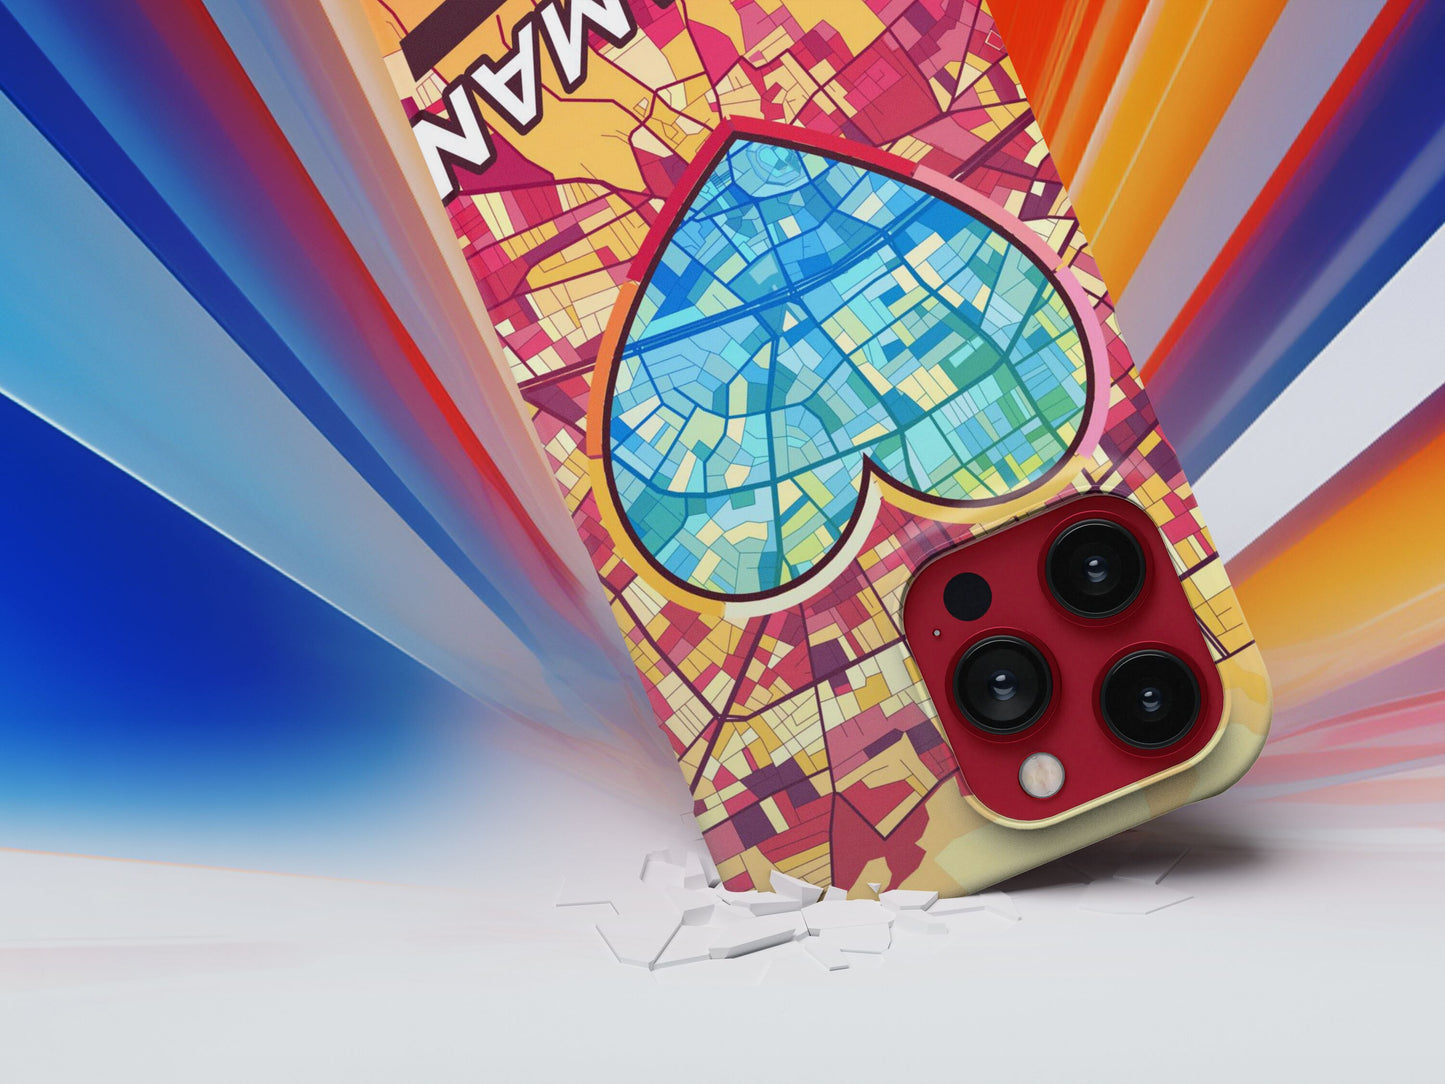 Adıyaman Turkey slim phone case with colorful icon. Birthday, wedding or housewarming gift. Couple match cases.